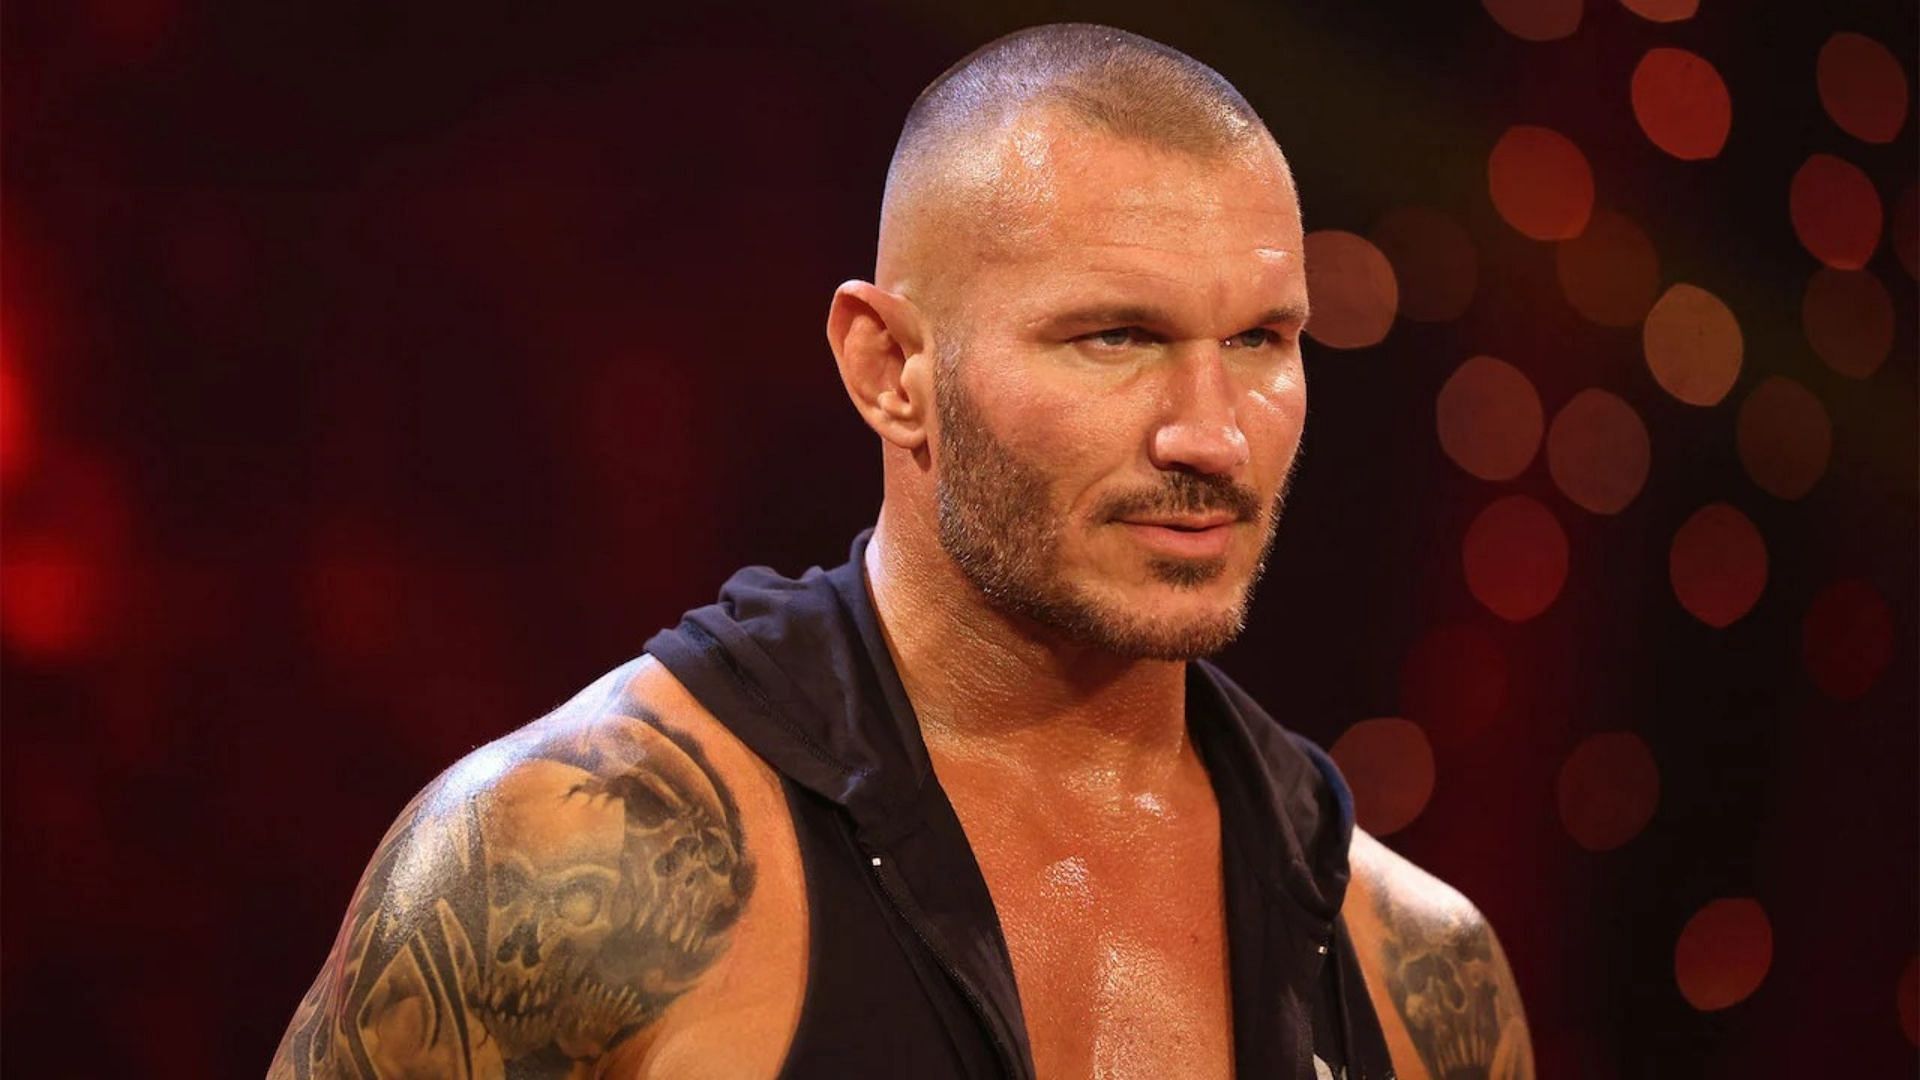 Randy Orton may not return to WWE alone